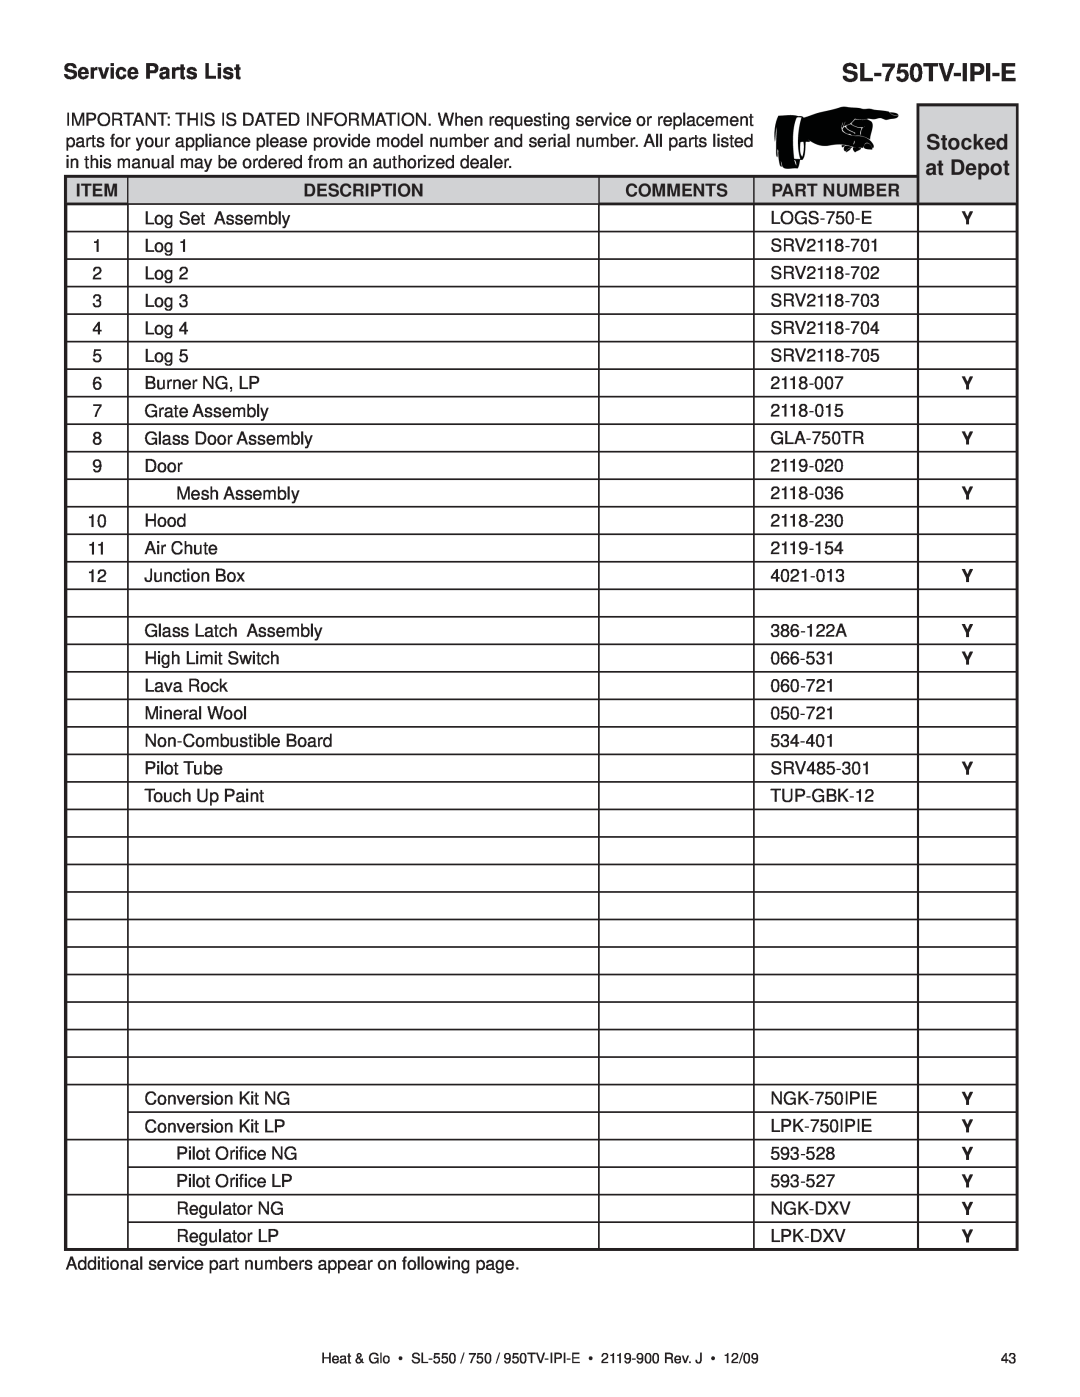 Heat & Glo LifeStyle SL-750TV-IPI-E owner manual Service Parts List, at Depot, Stocked, Description, Comments, Part Number 